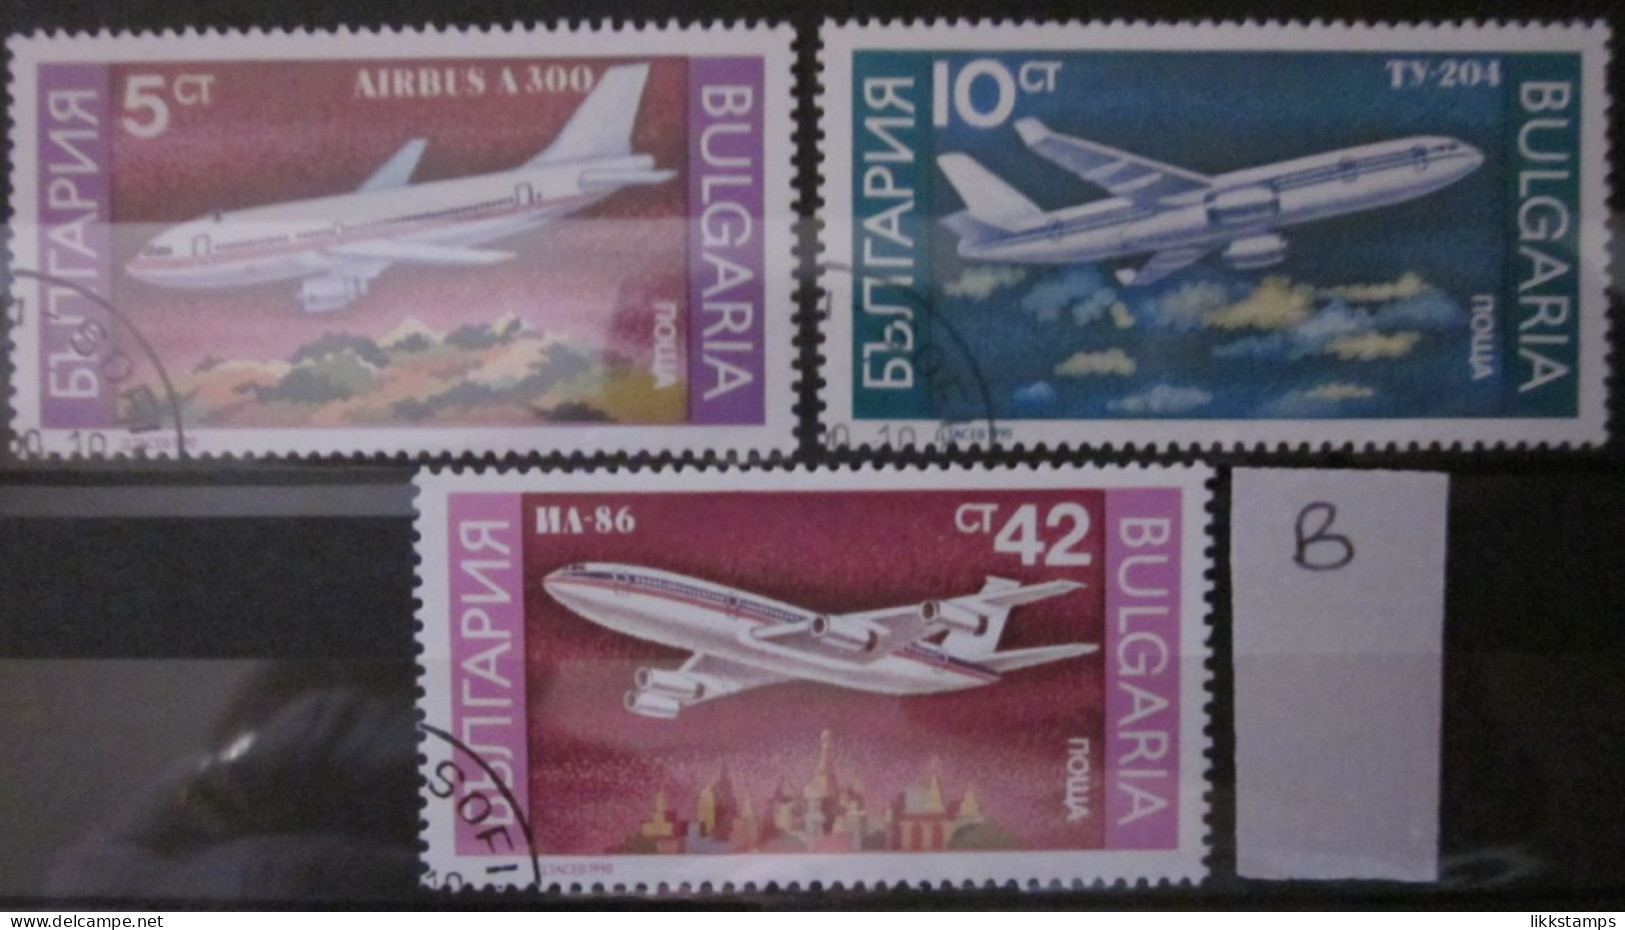 BULGARIA 1990 ~ S.G. 3705, 3706 & 3709, ~ 'LOT B' ~ AIRCRAFT. ~  VFU #02962 - Usados